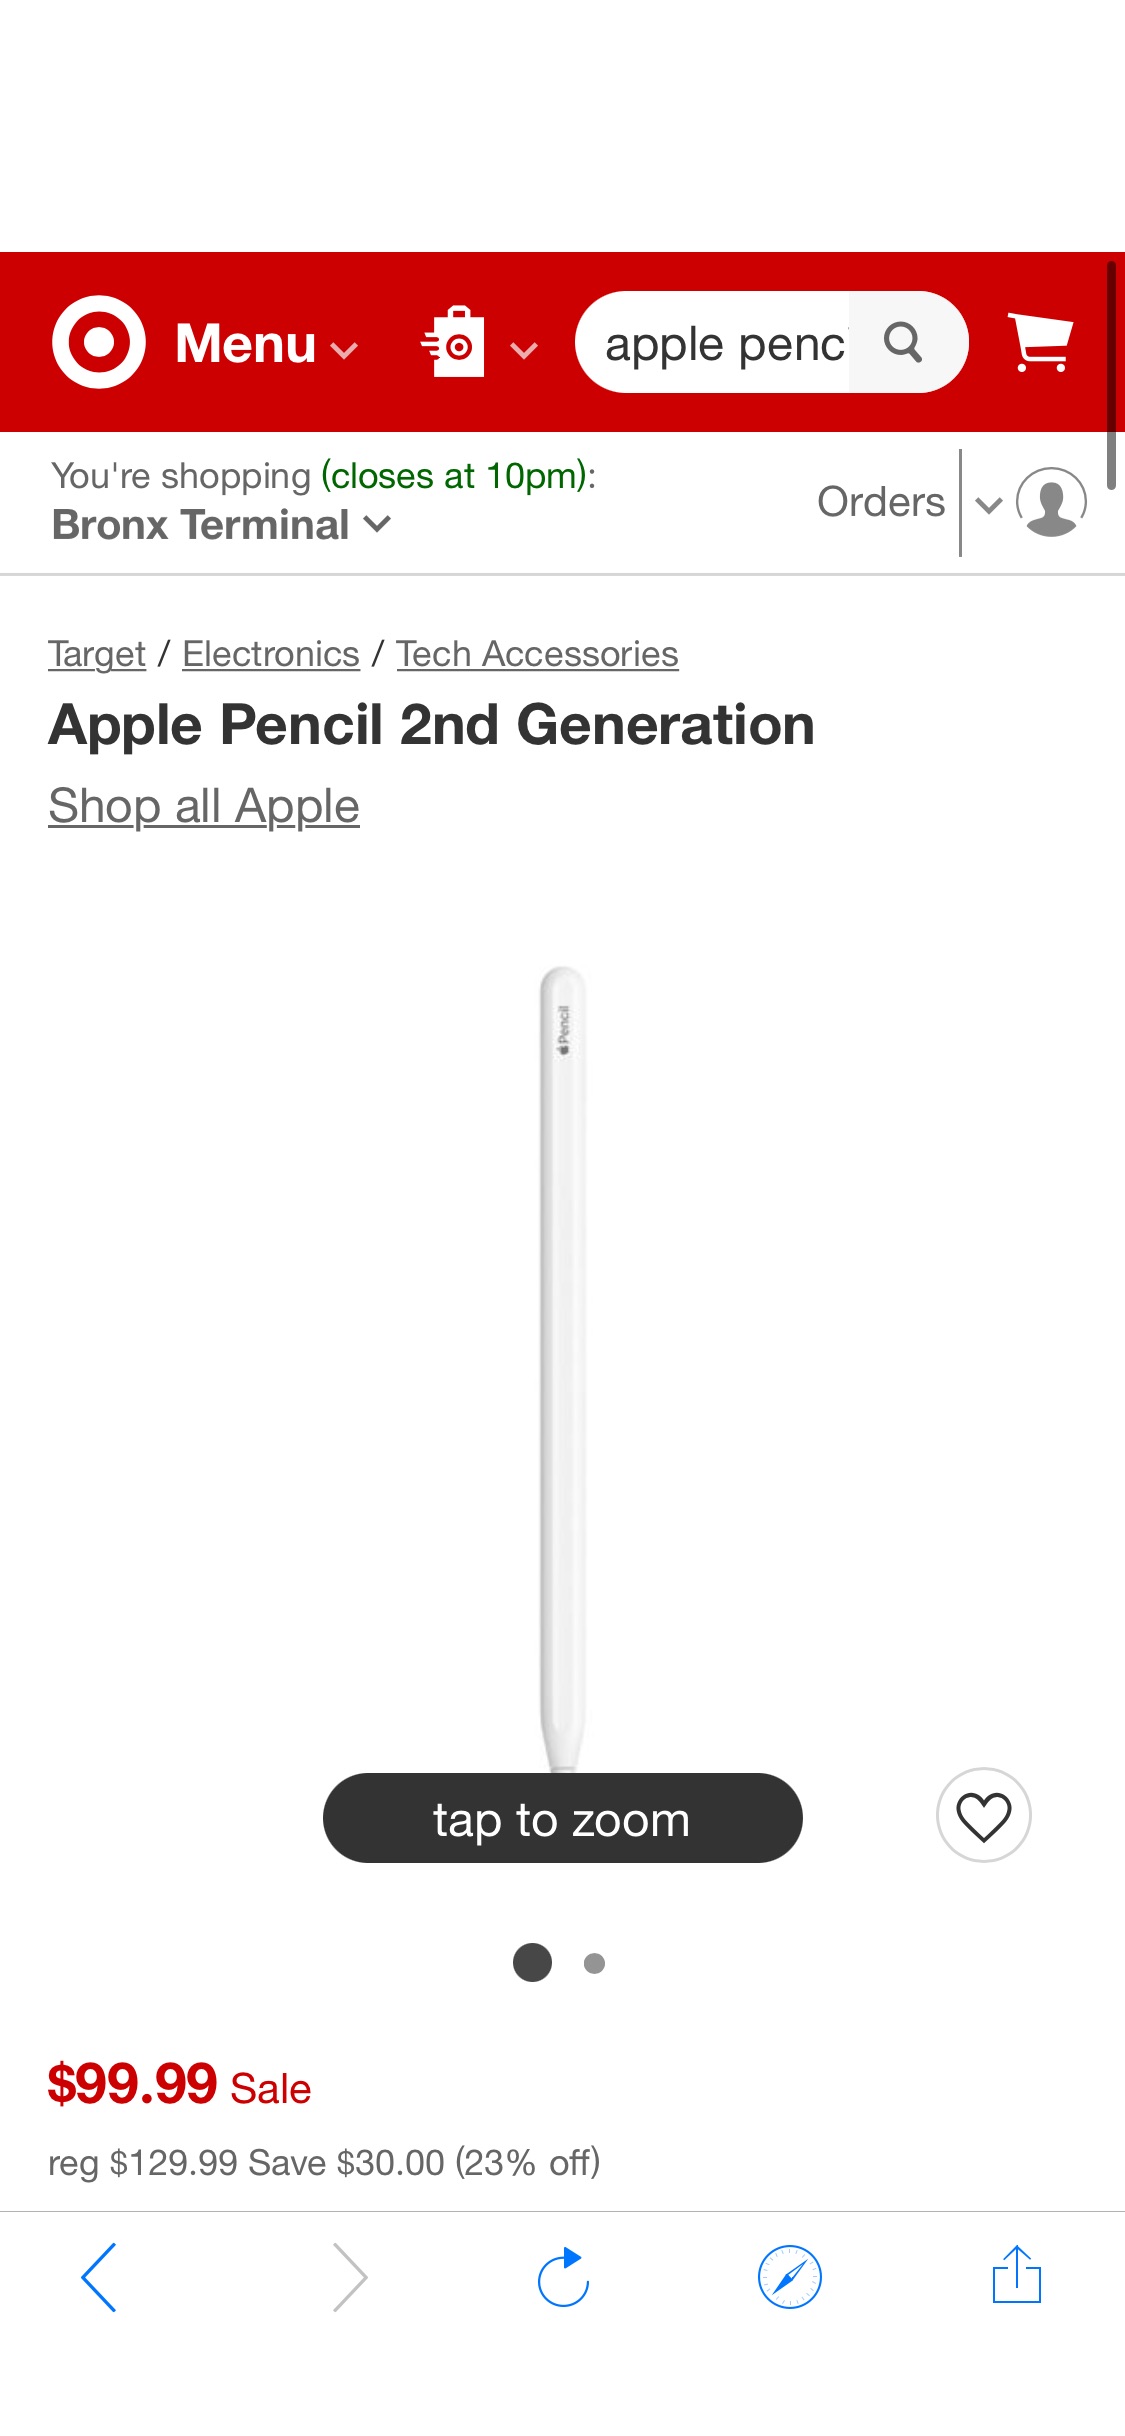 Apple Pencil 2nd Generation : Target
苹果手写笔第二代